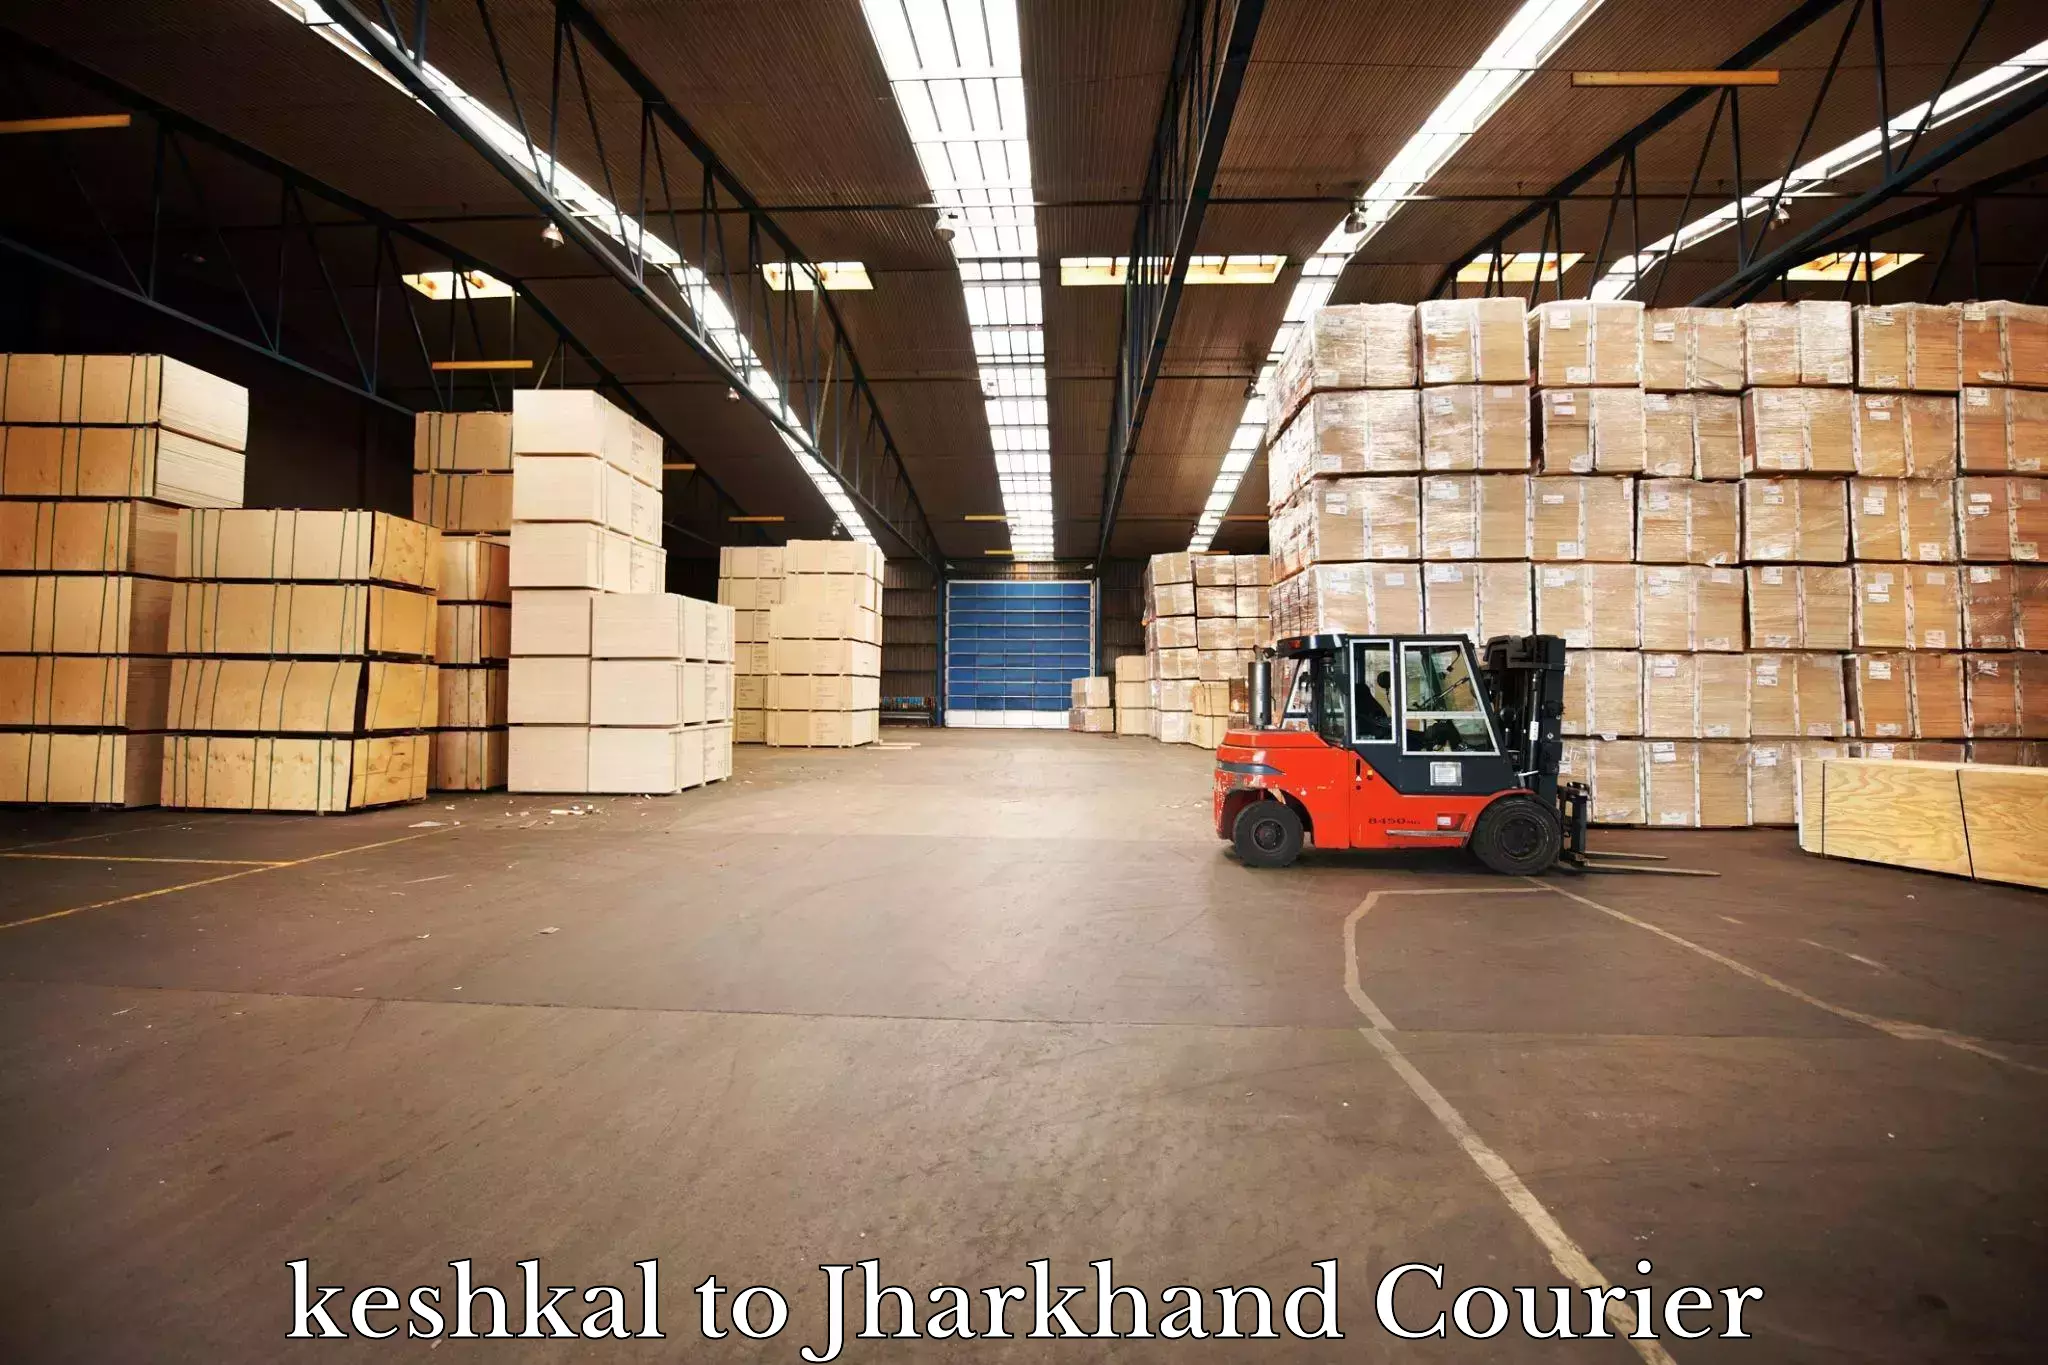 Dynamic courier operations keshkal to Bokaro Steel City